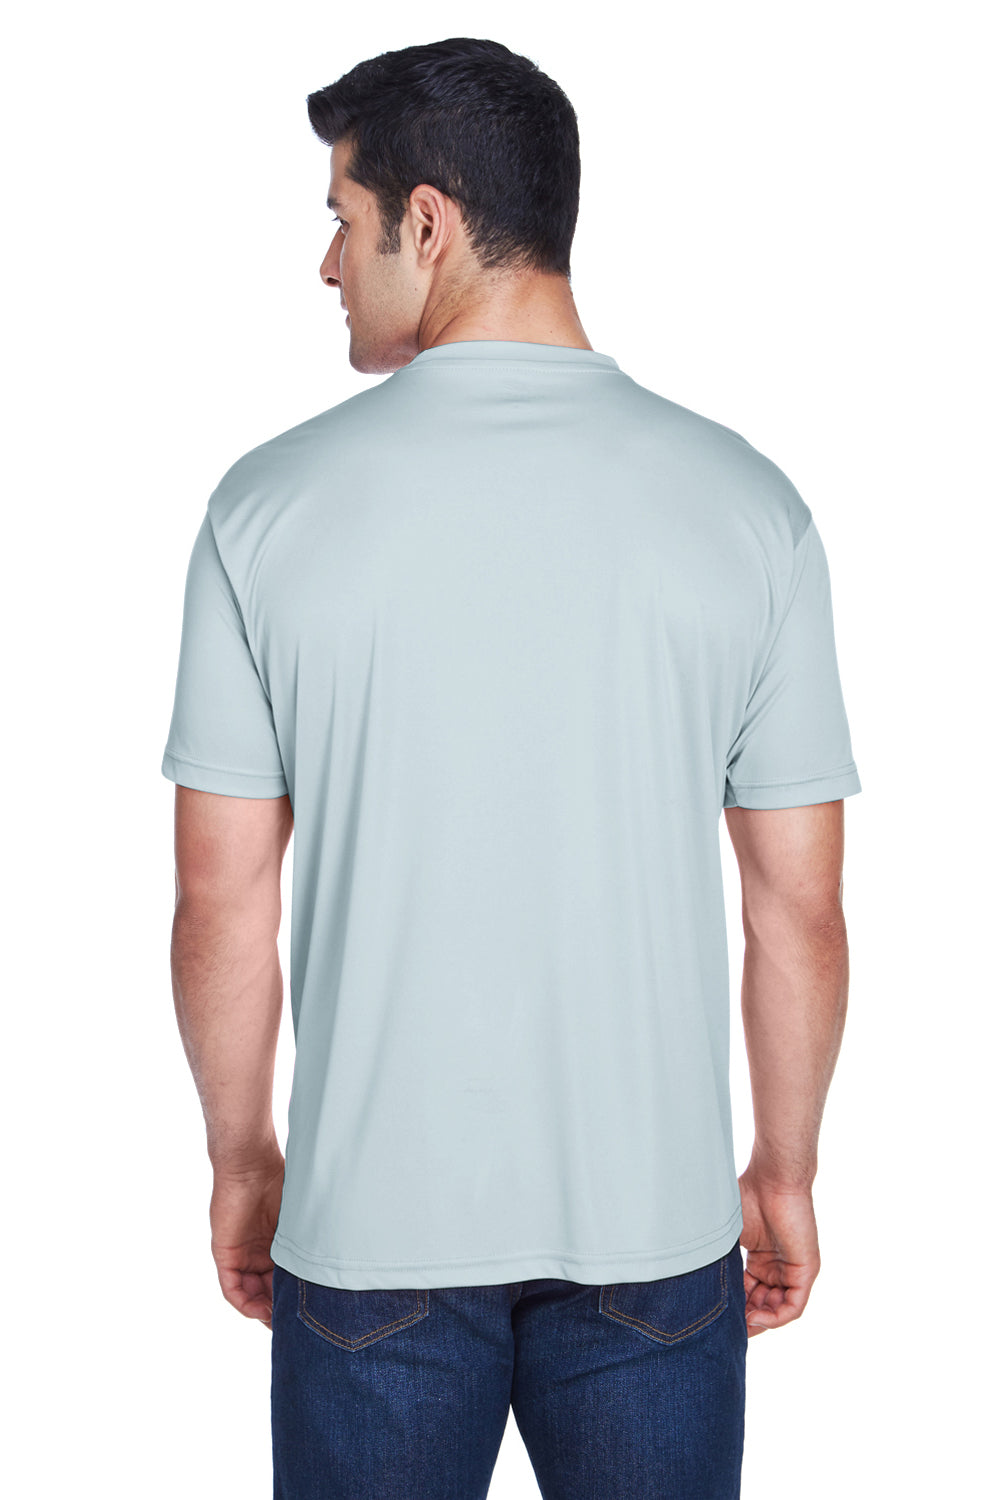 UltraClub 8420 Mens Cool & Dry Performance Moisture Wicking Short Sleeve Crewneck T-Shirt Grey Back